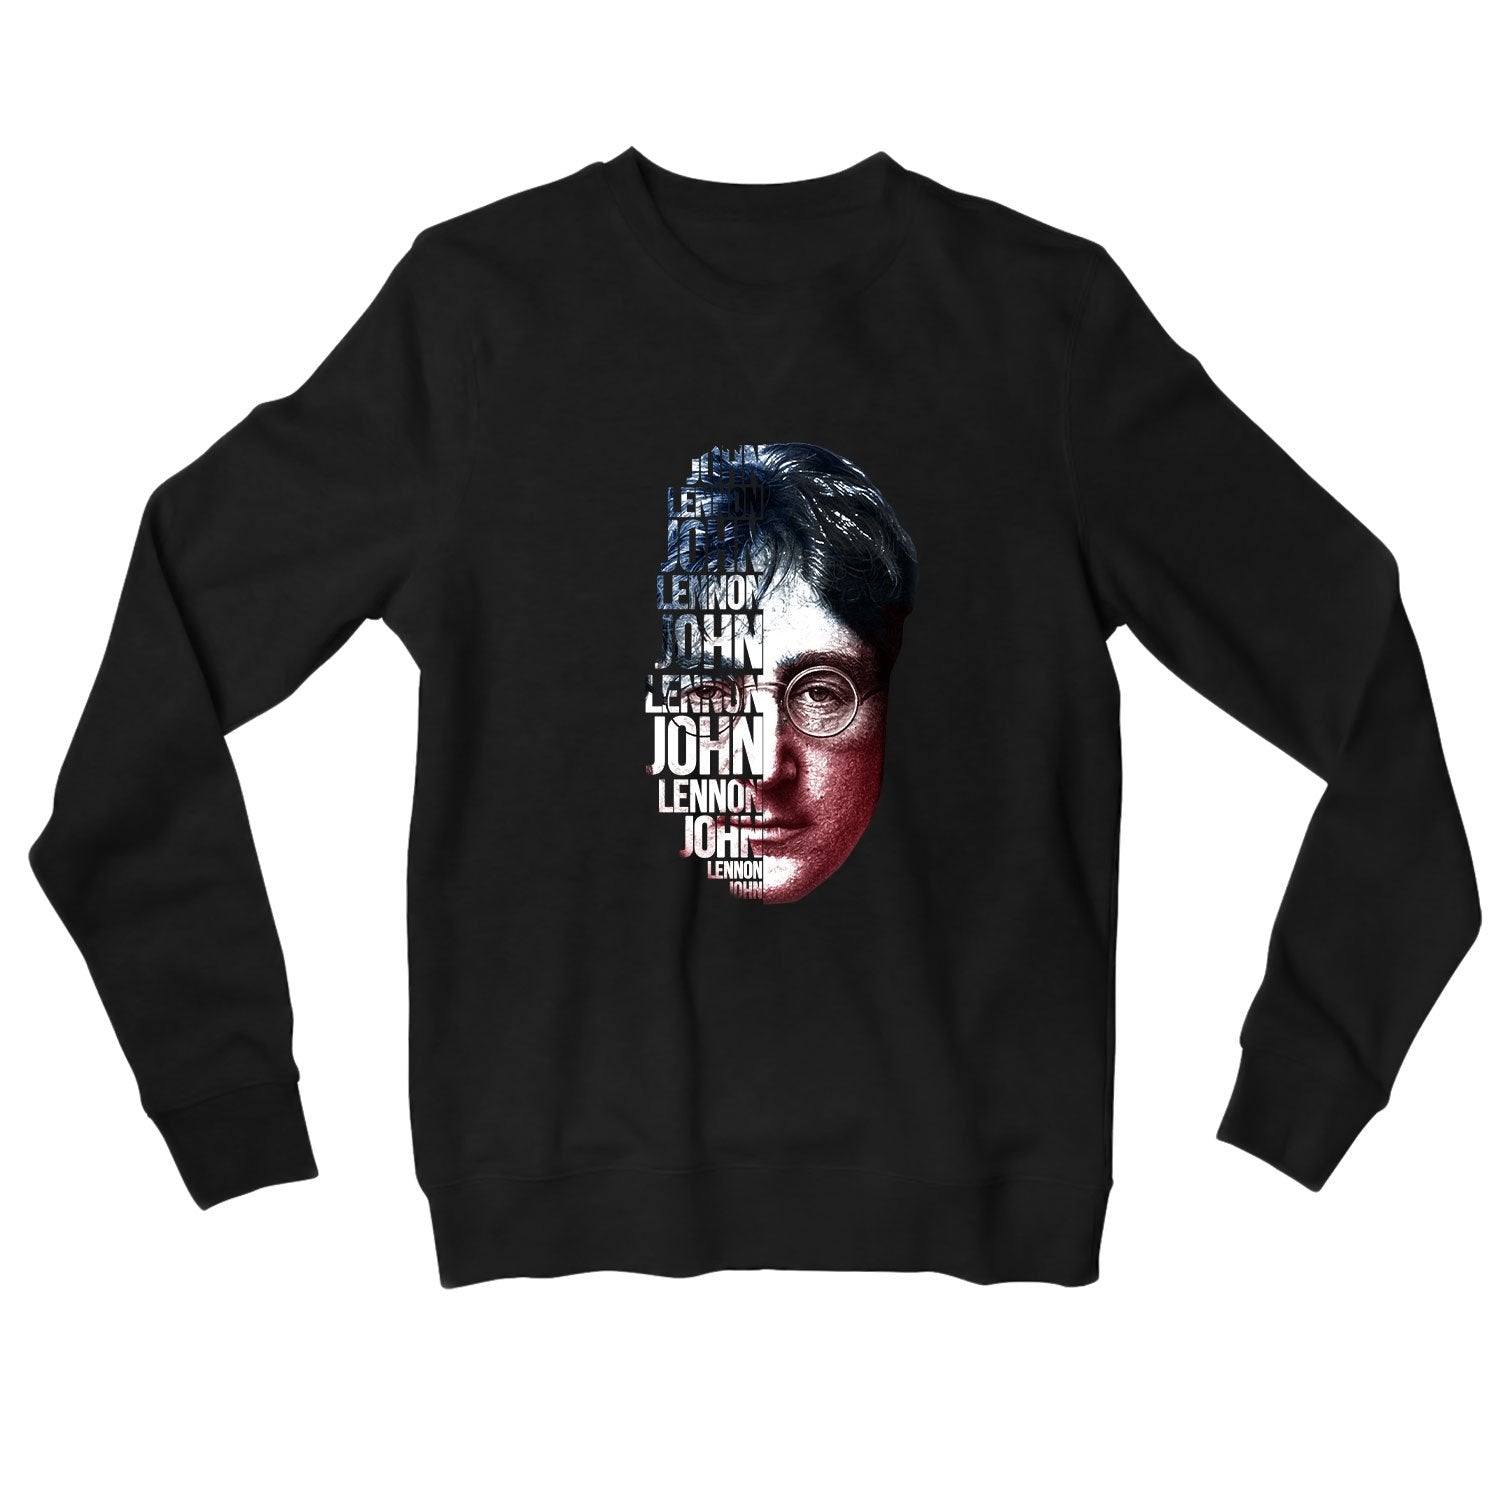 The Beatles Sweatshirt - John Lennon Sweatshirt The Banyan Tee TBT